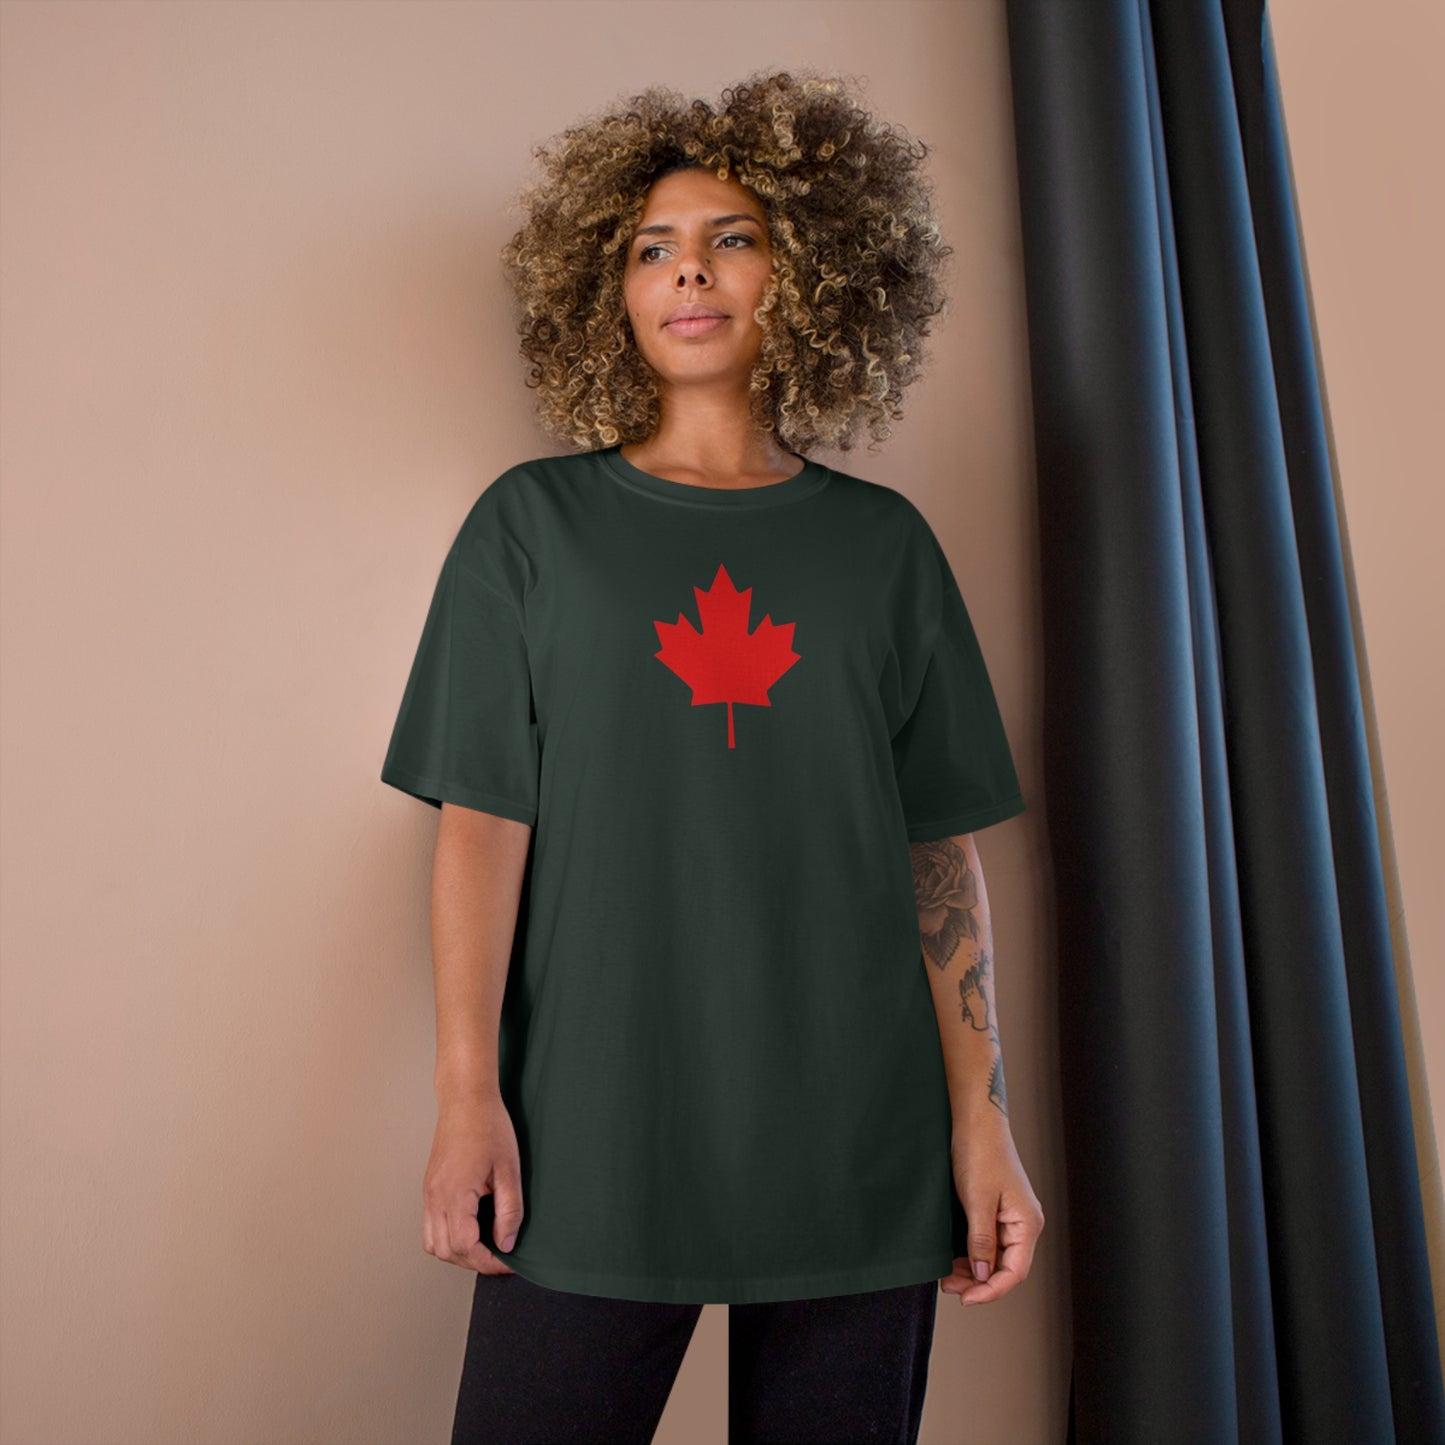 Champion T-Shirt, Canadian Maple Leaf